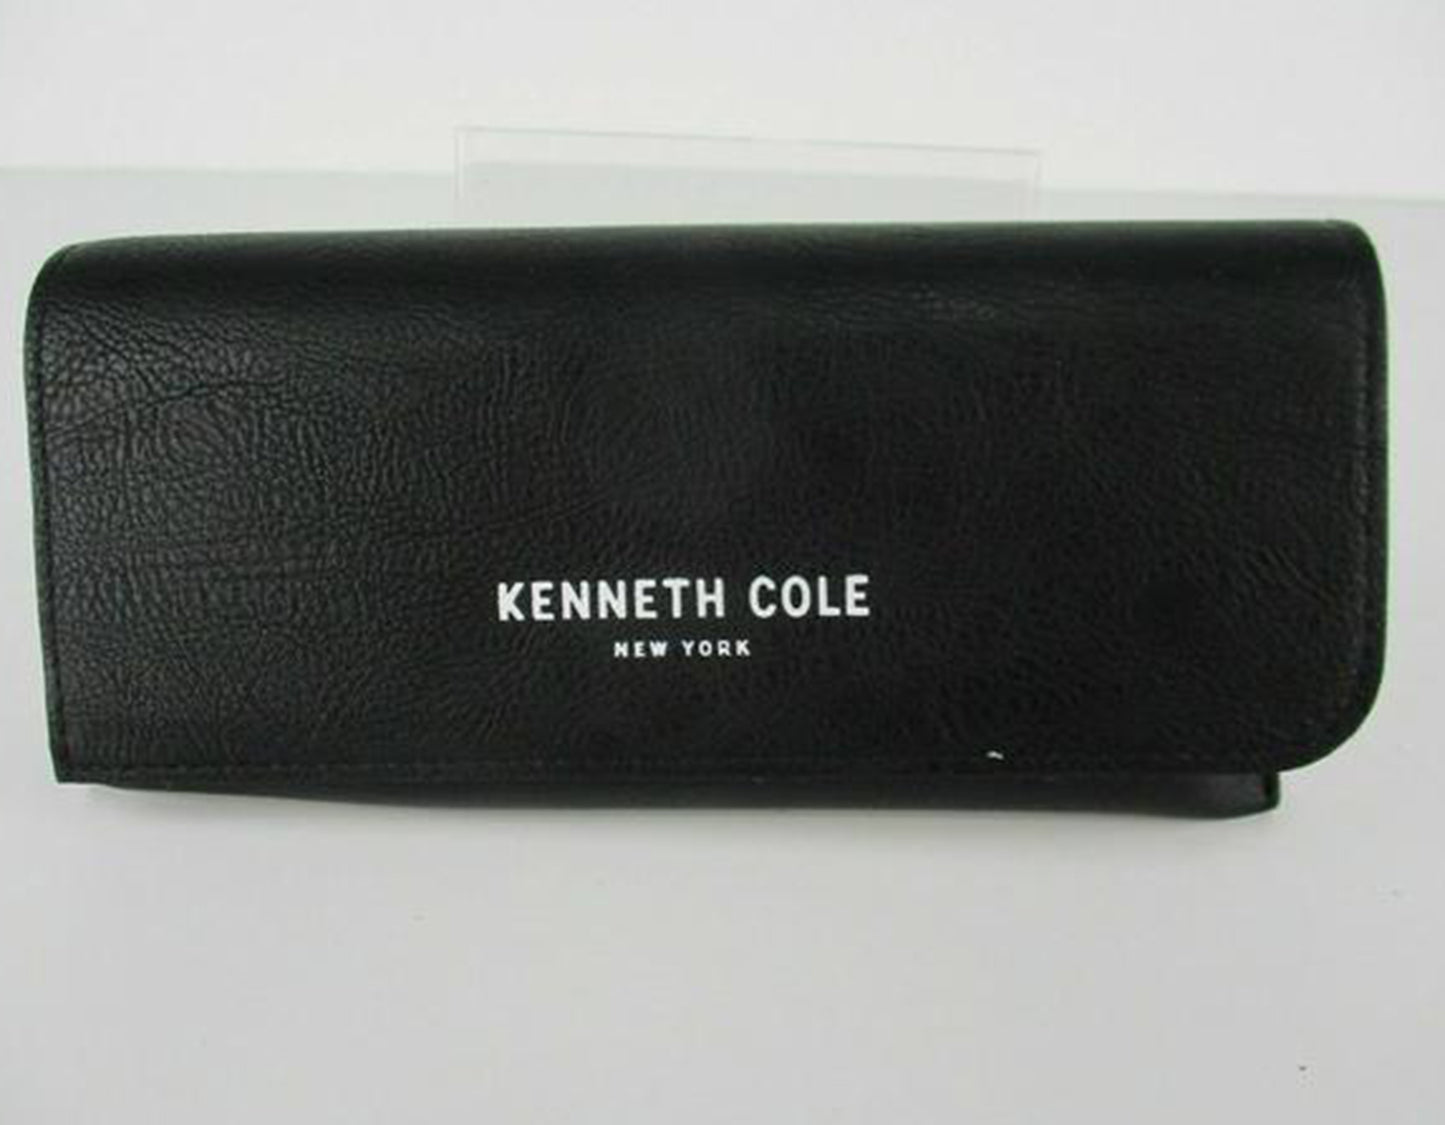 Kenneth Cole Reaction KC0884-092-54 54mm New Eyeglasses